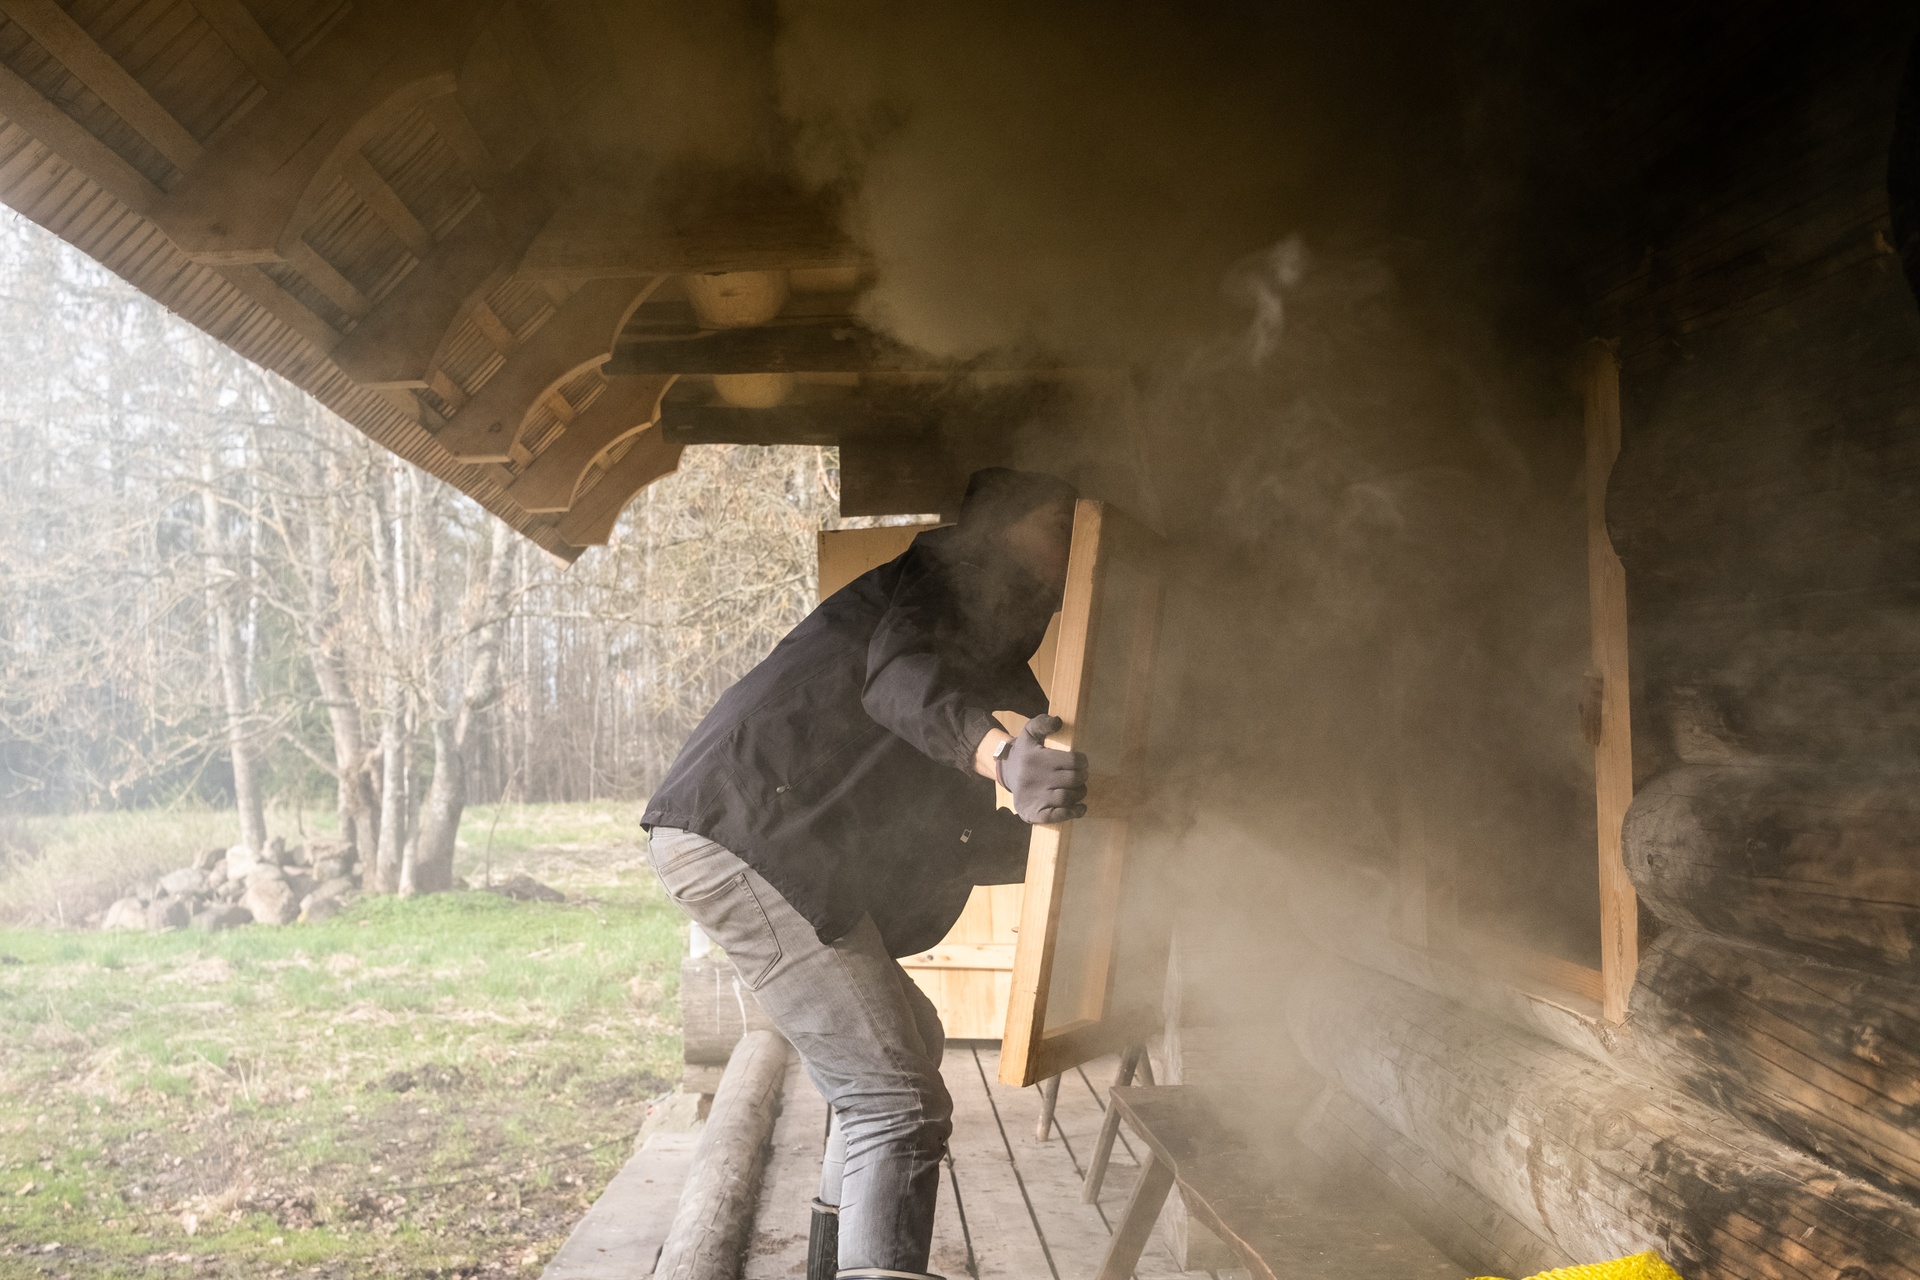 Man opens smoke sauna windows to ventilate sauna before use